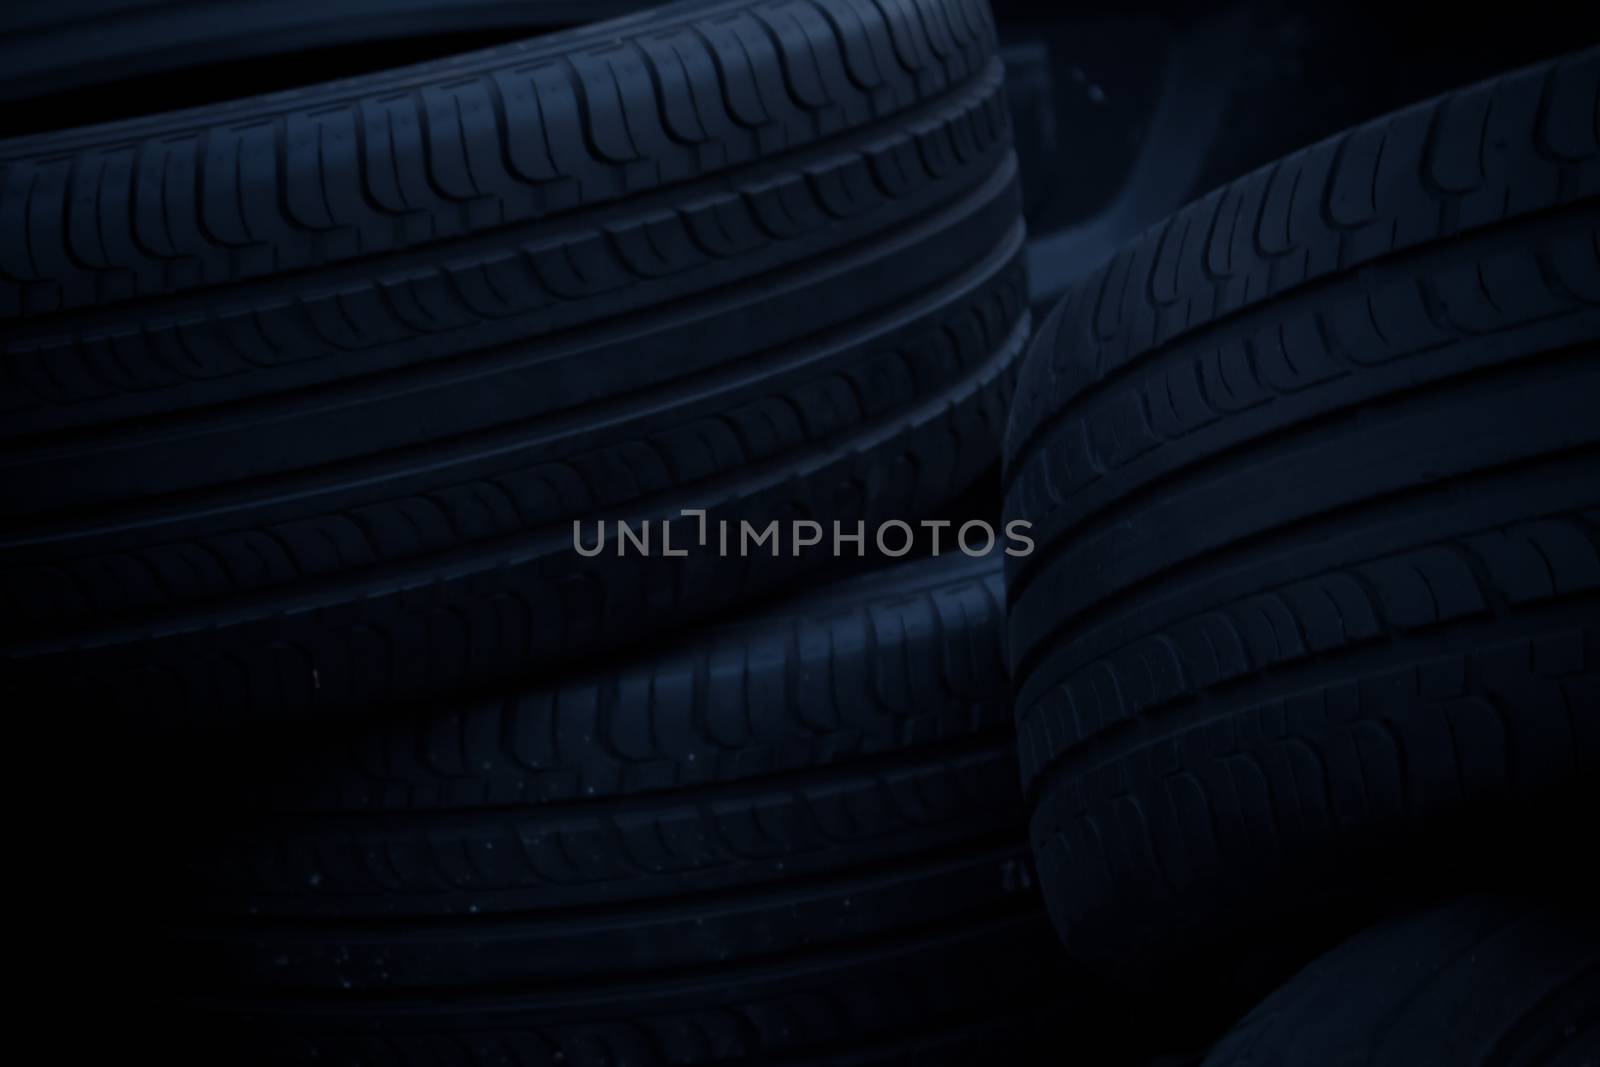 Old rubber tires for black background